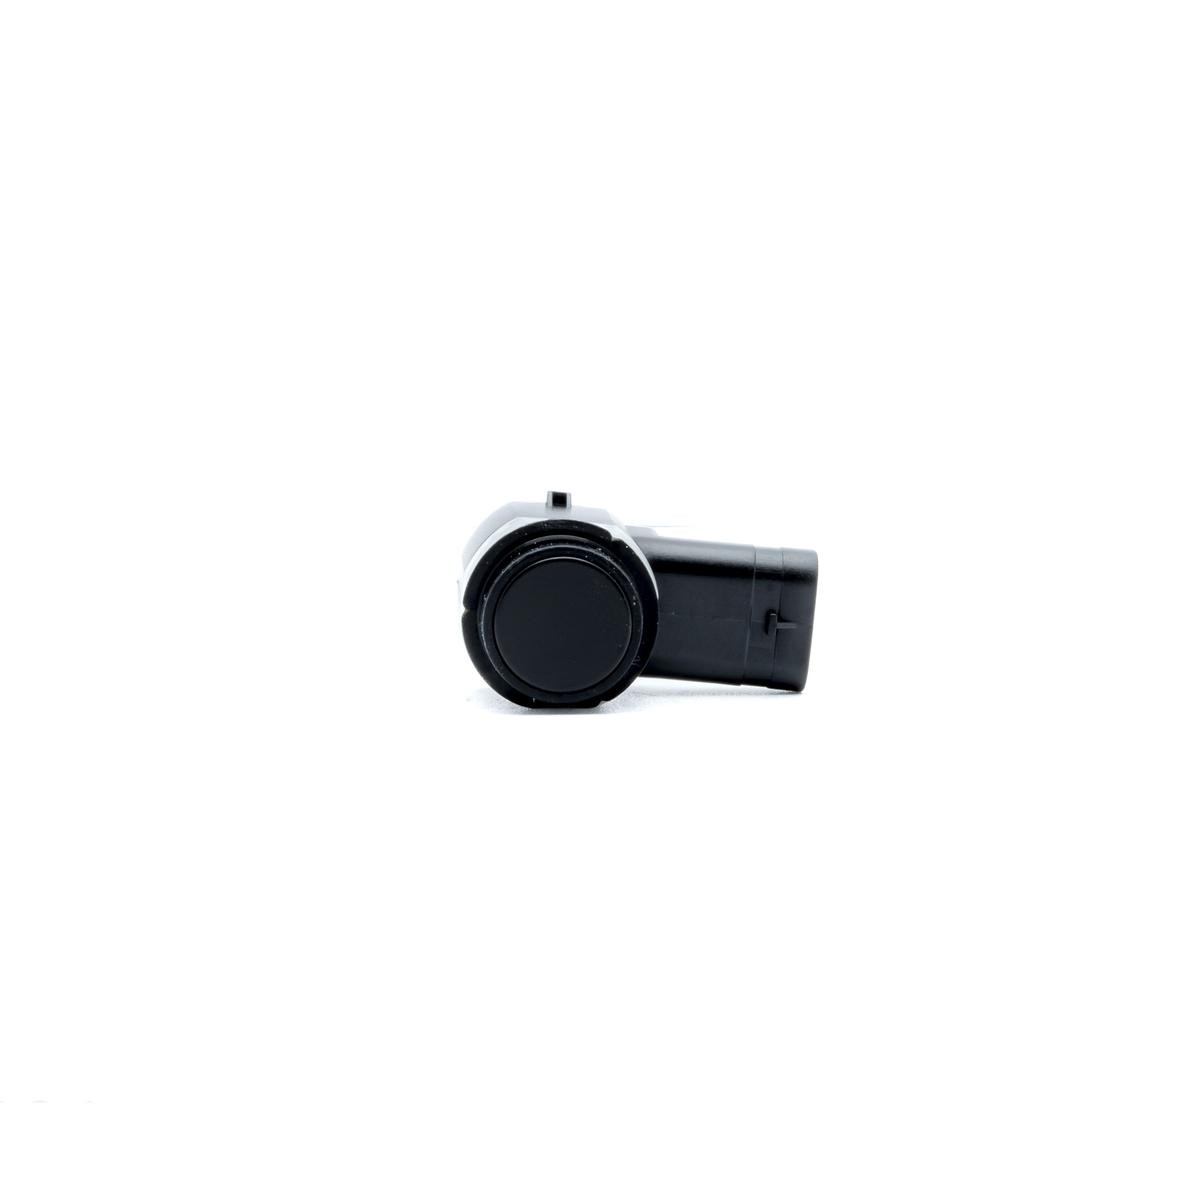 EINPARTS EPPDC51 Parking sensor Front, Rear, black, Ultrasonic Sensor